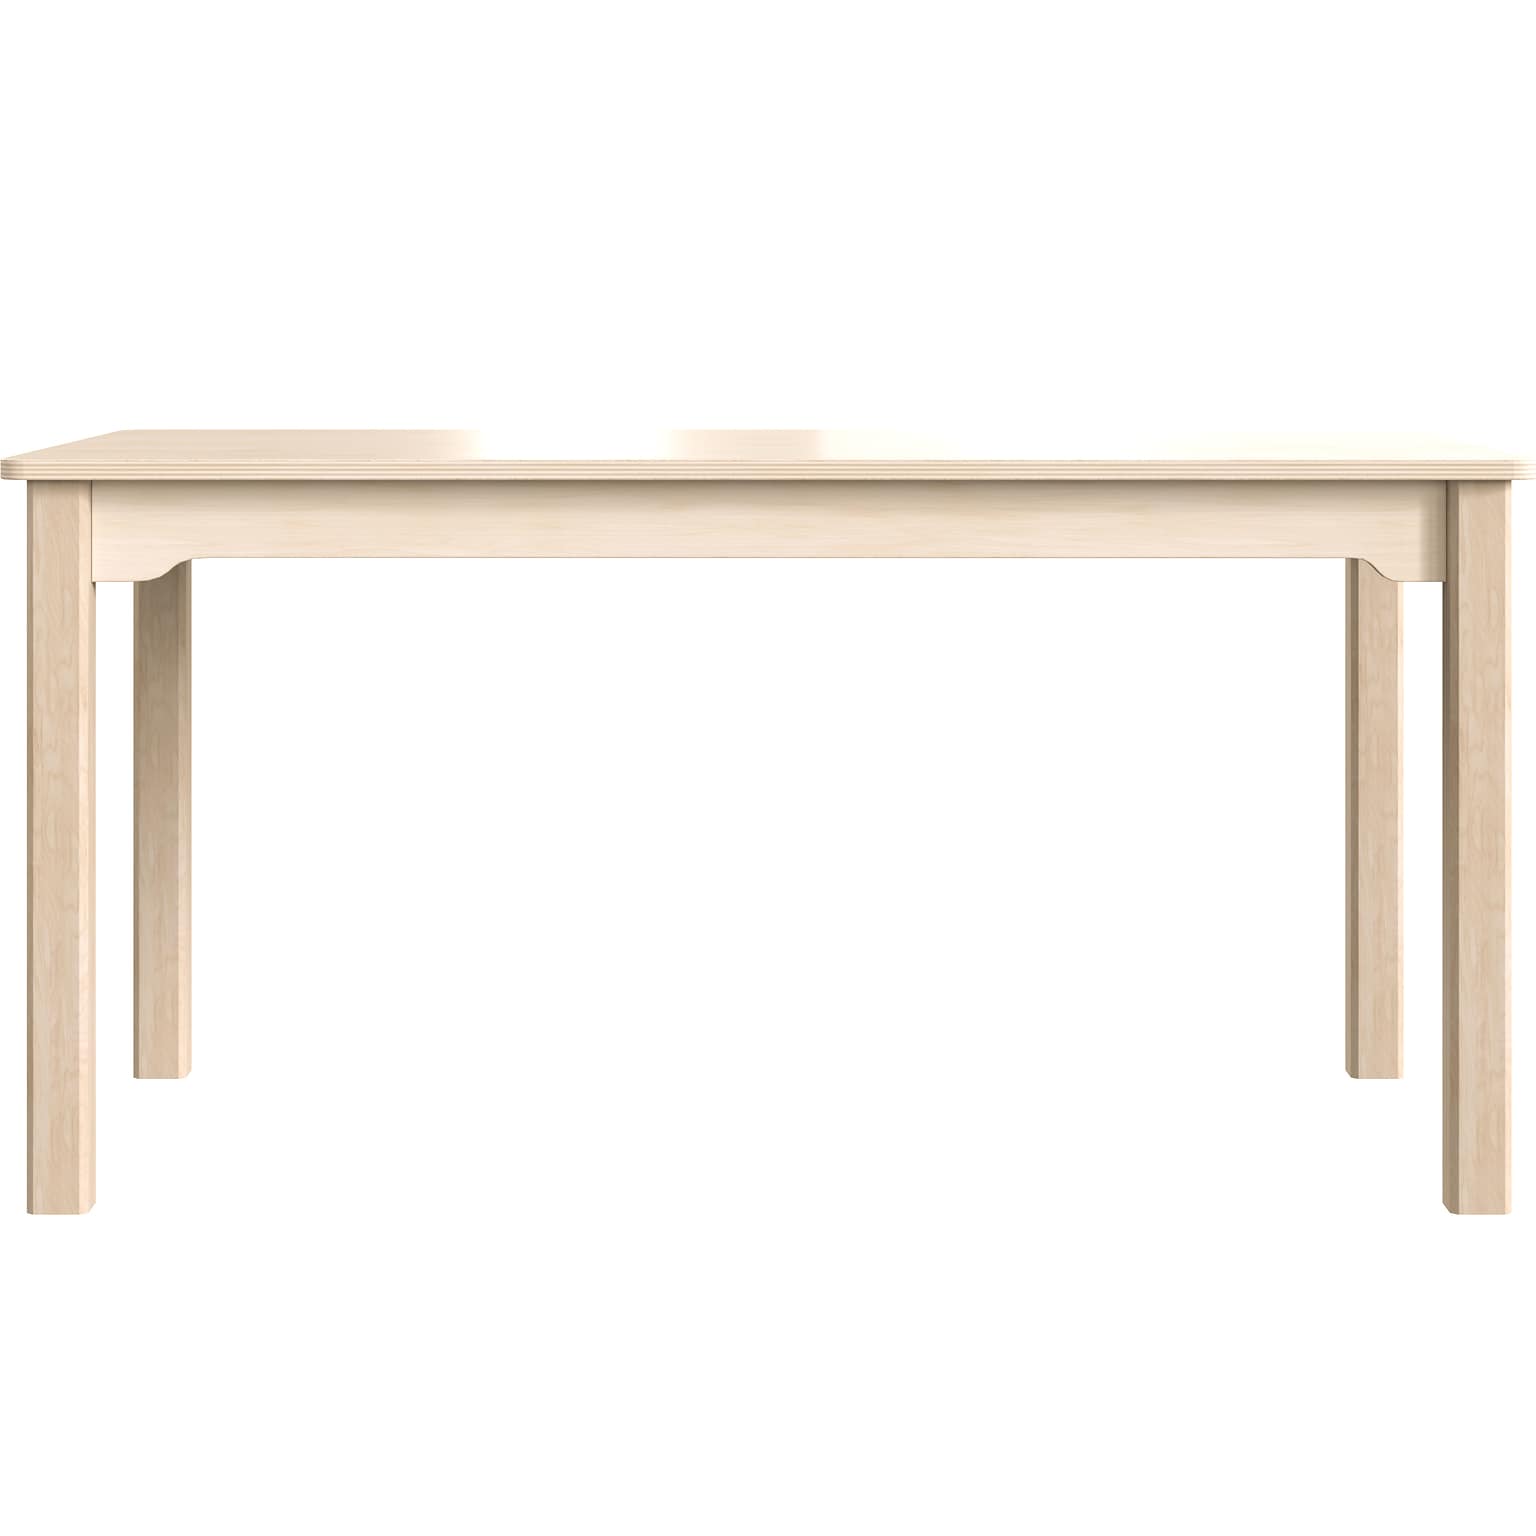 Flash Furniture Bright Beginnings Hercules Rectangular Table, 47.25 x 23.5, Beech (MK-ME088012-GG)